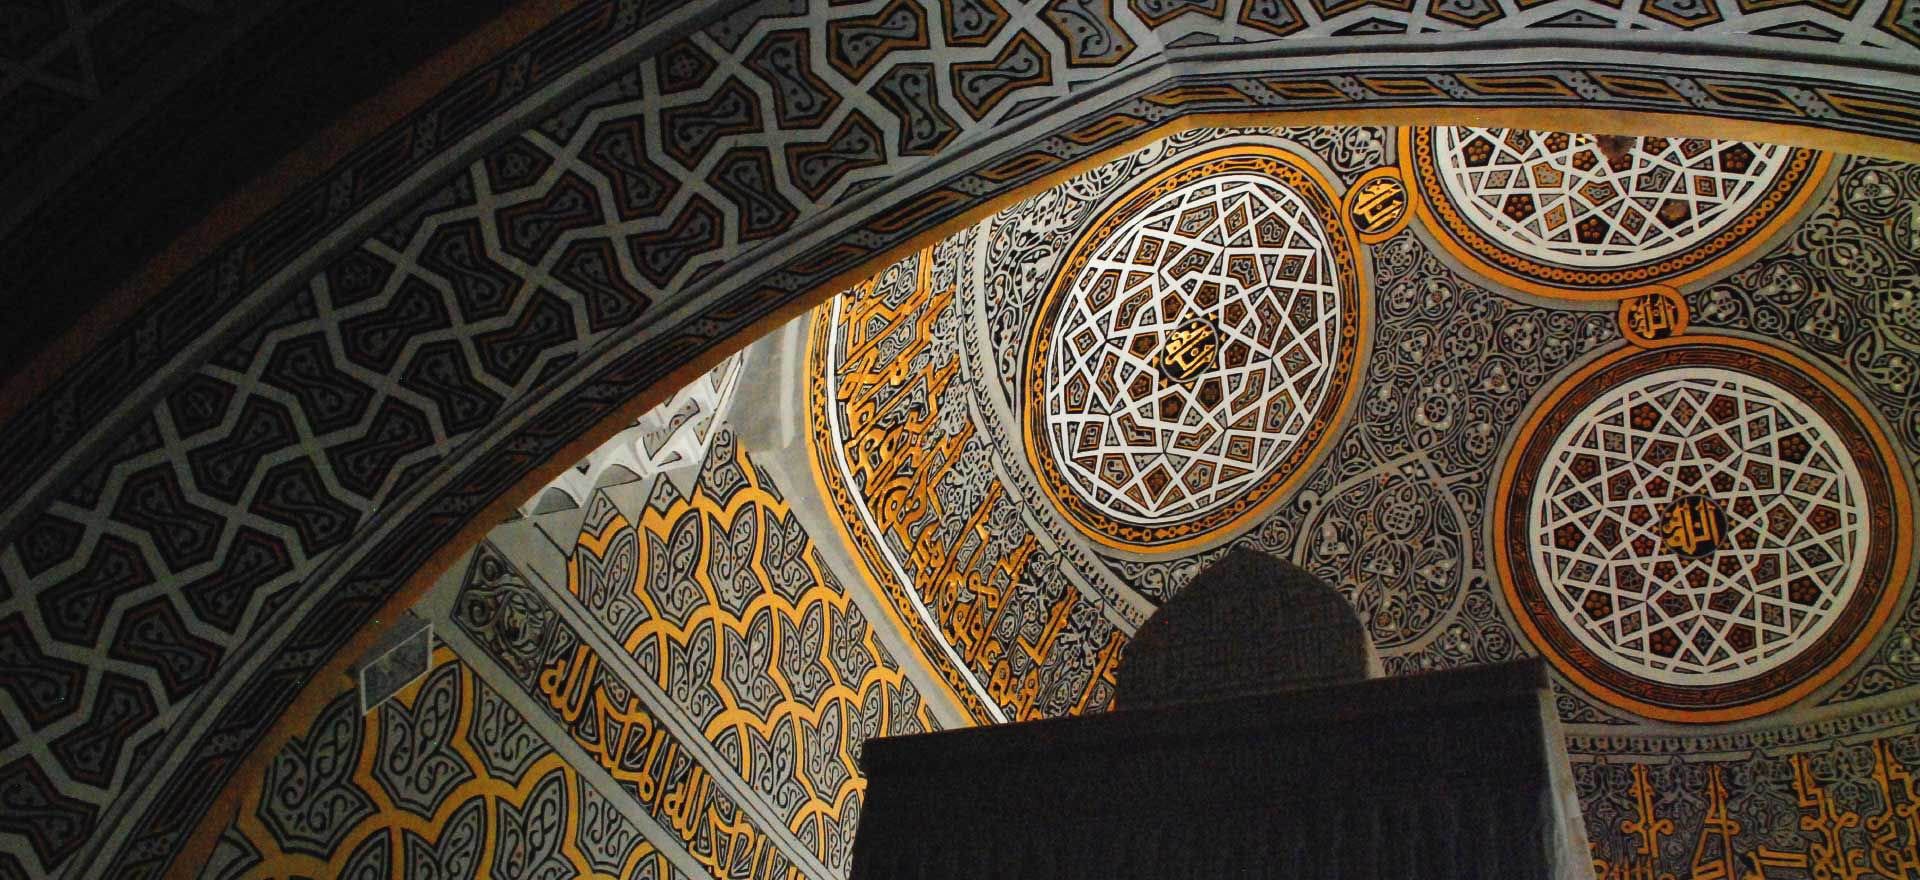 Interior of mausoleum - Uzbekistan tours and holidays